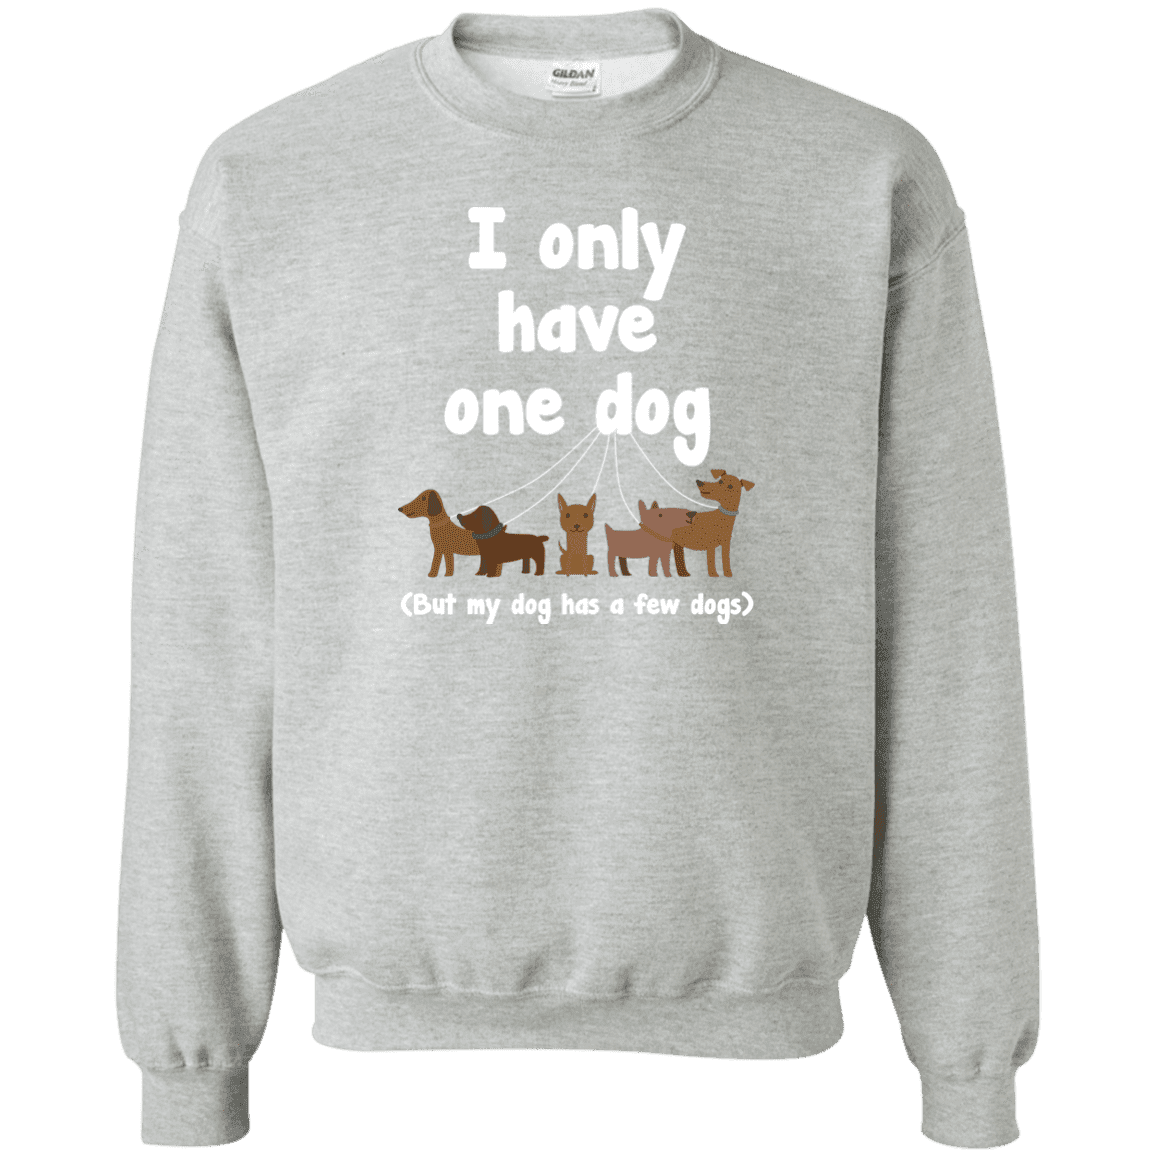 I Only Have 1 Dog - Sweatshirt.